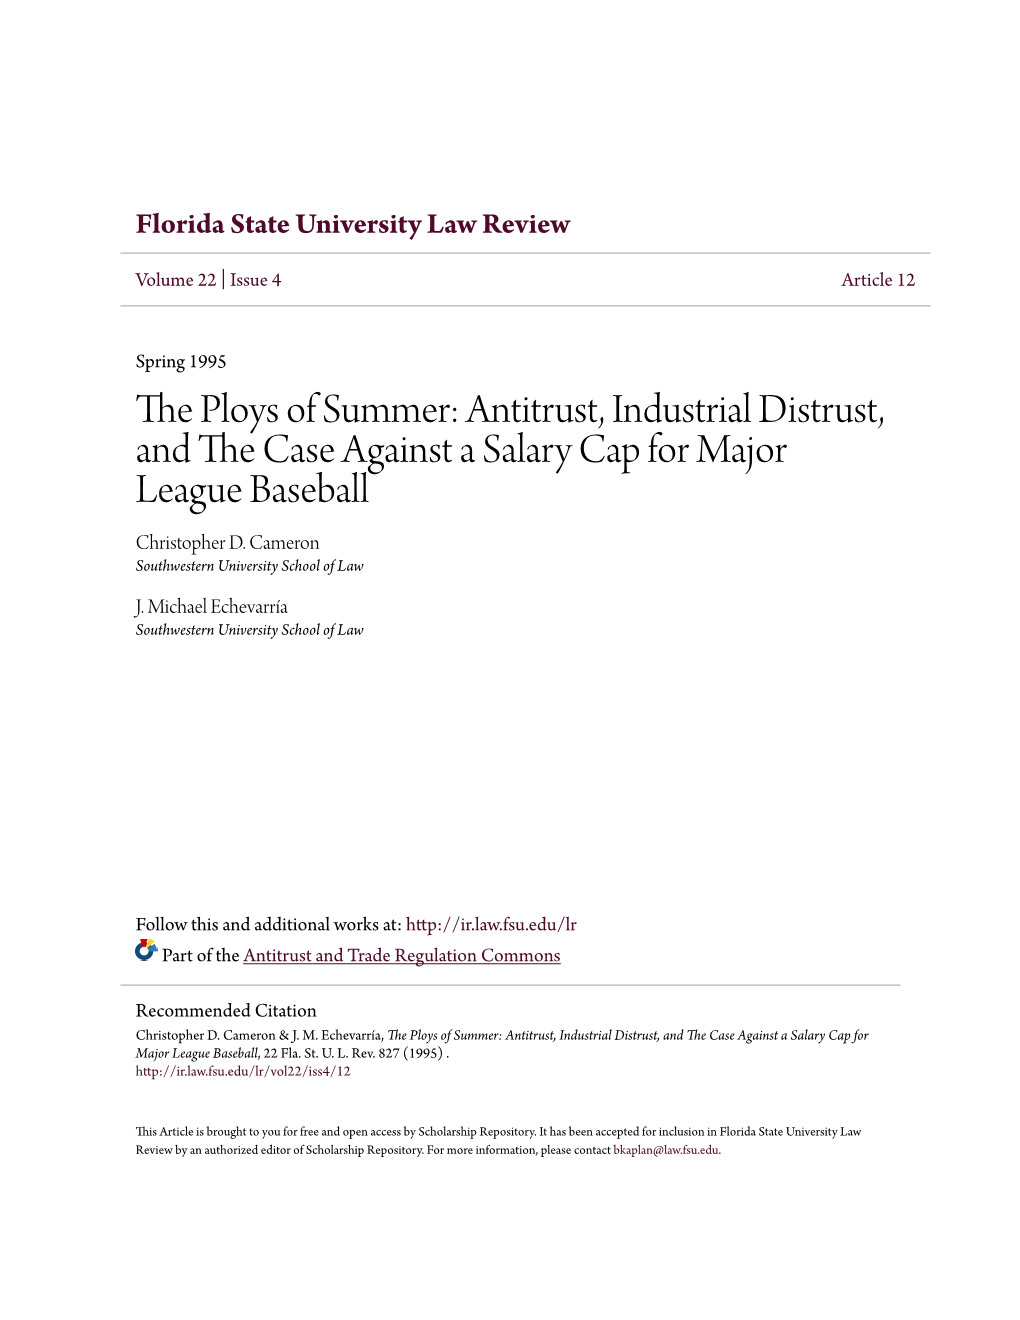 Antitrust, Industrial Distrust, and the Case Against a Salary Cap for Major League Baseball, 22 Fla